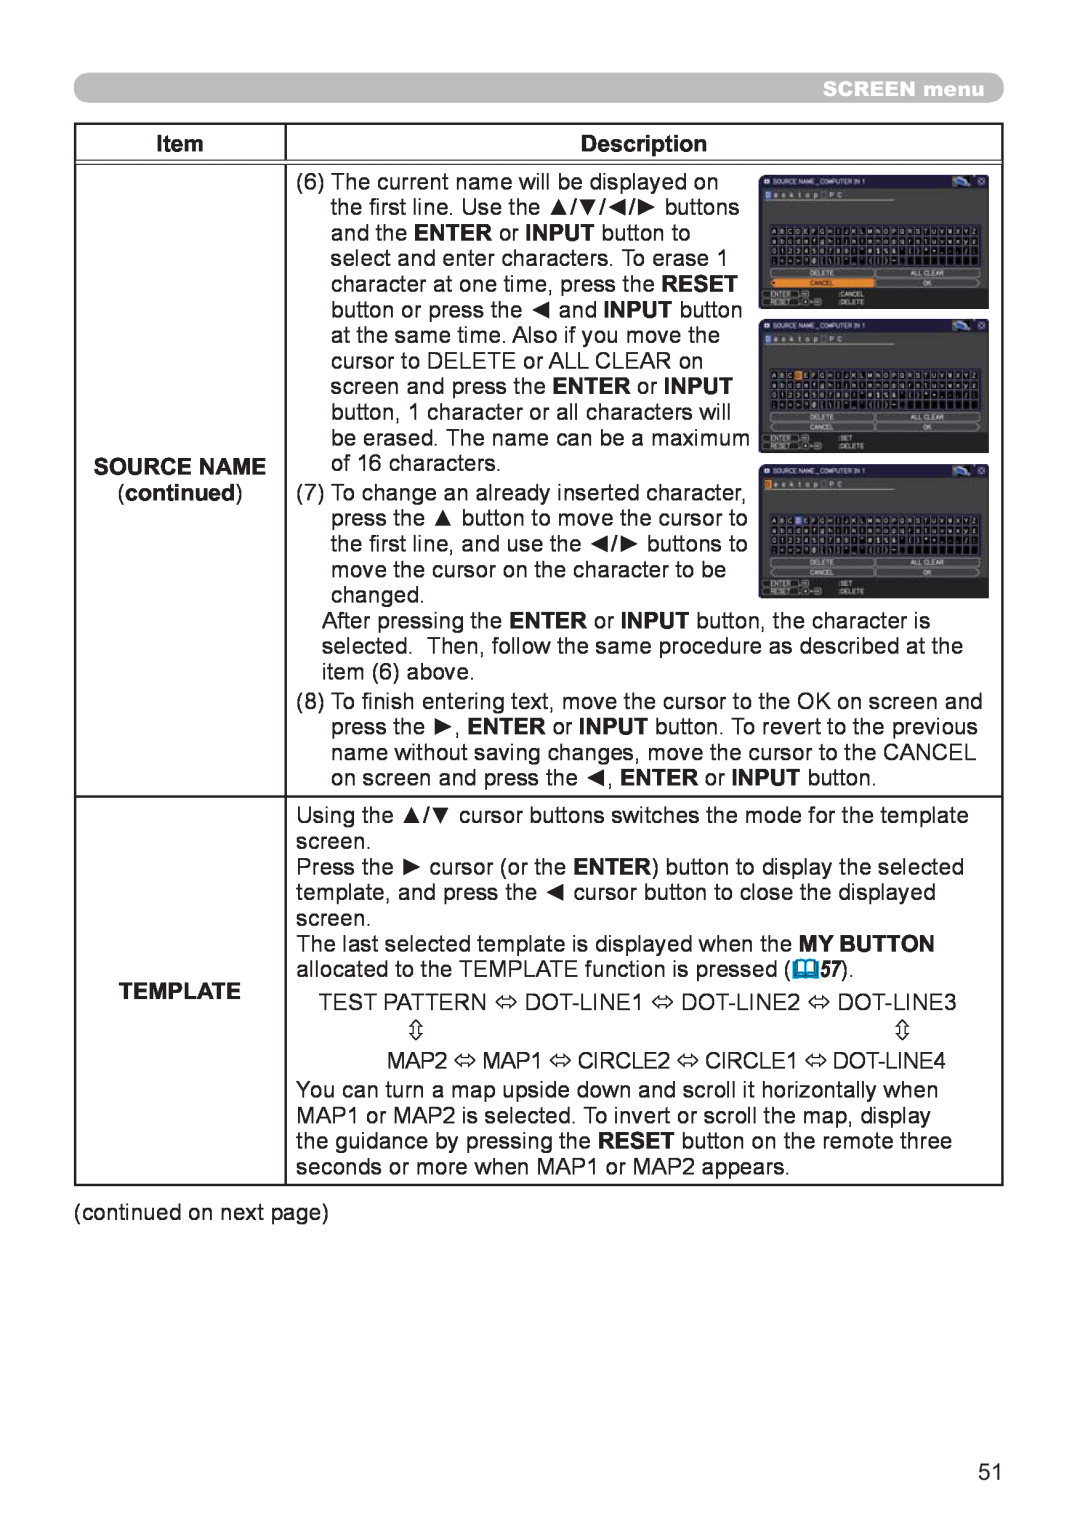 Hitachi CP-X3021WN, CP-X2521WN user manual Item, Description, Source Name, continued, Template 